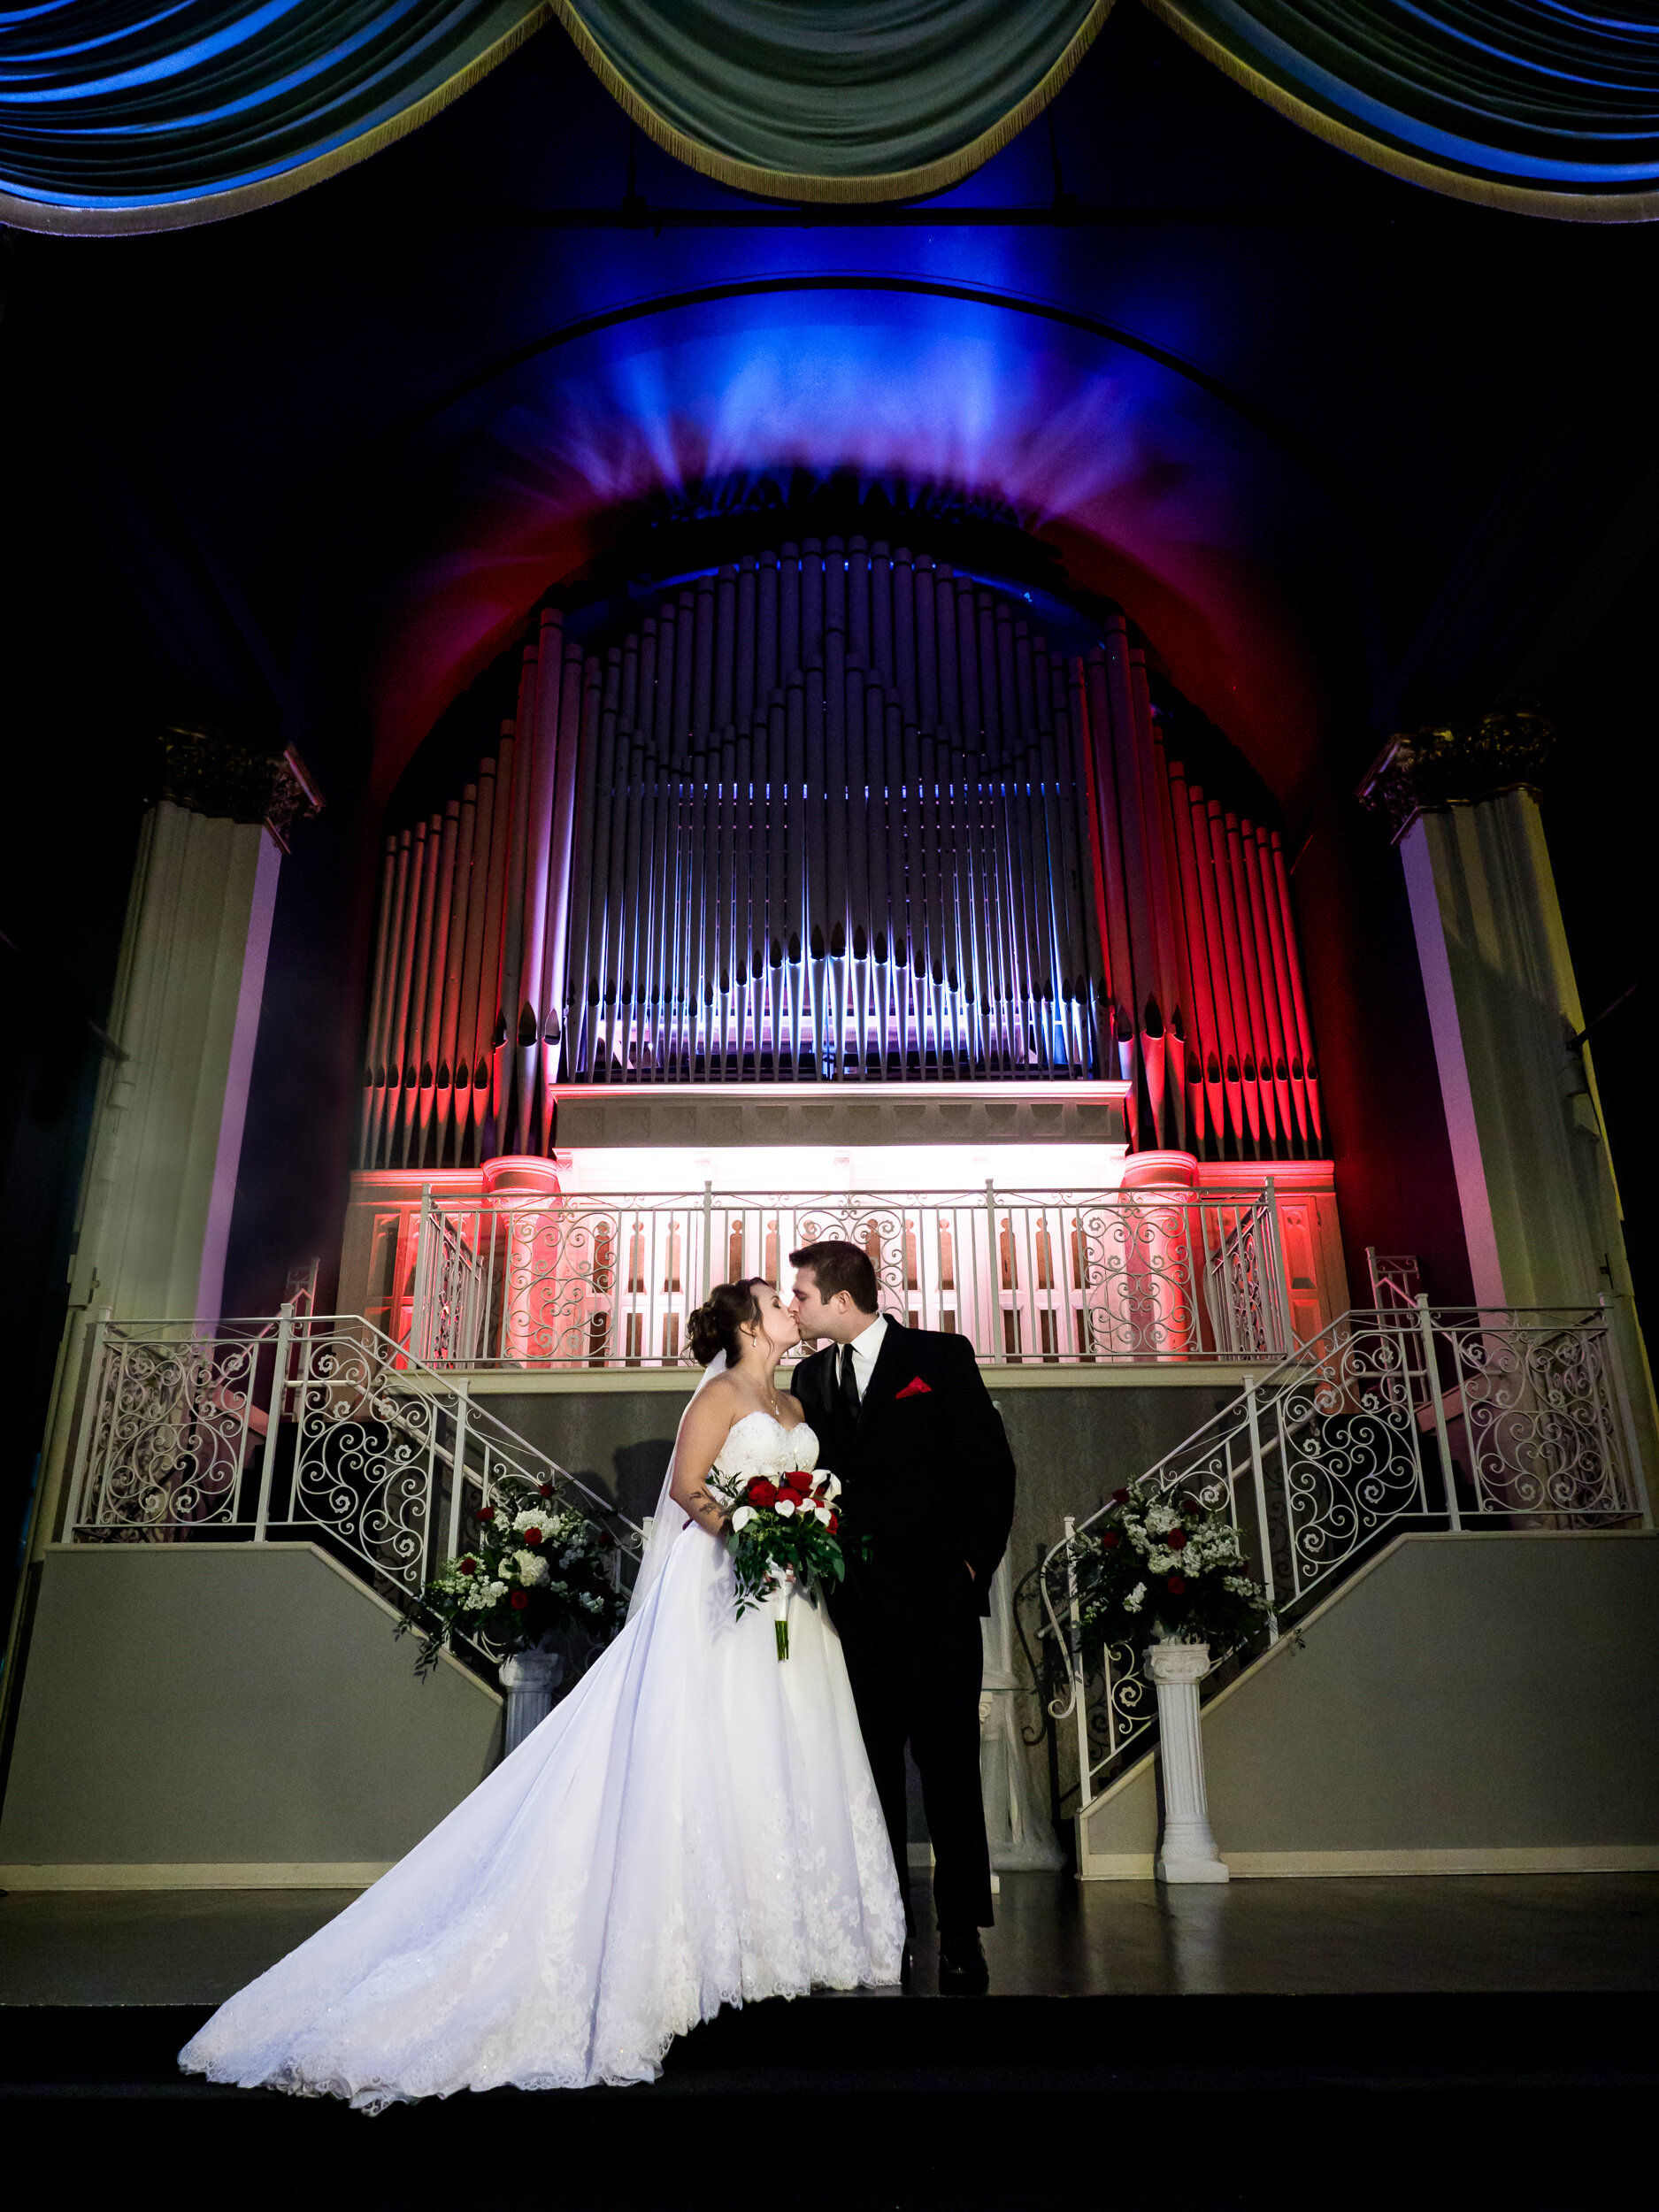 Uptown Center Wedding Venue - Michigan &amp; Northwest Indiana Wedding Photographer Region Weddings